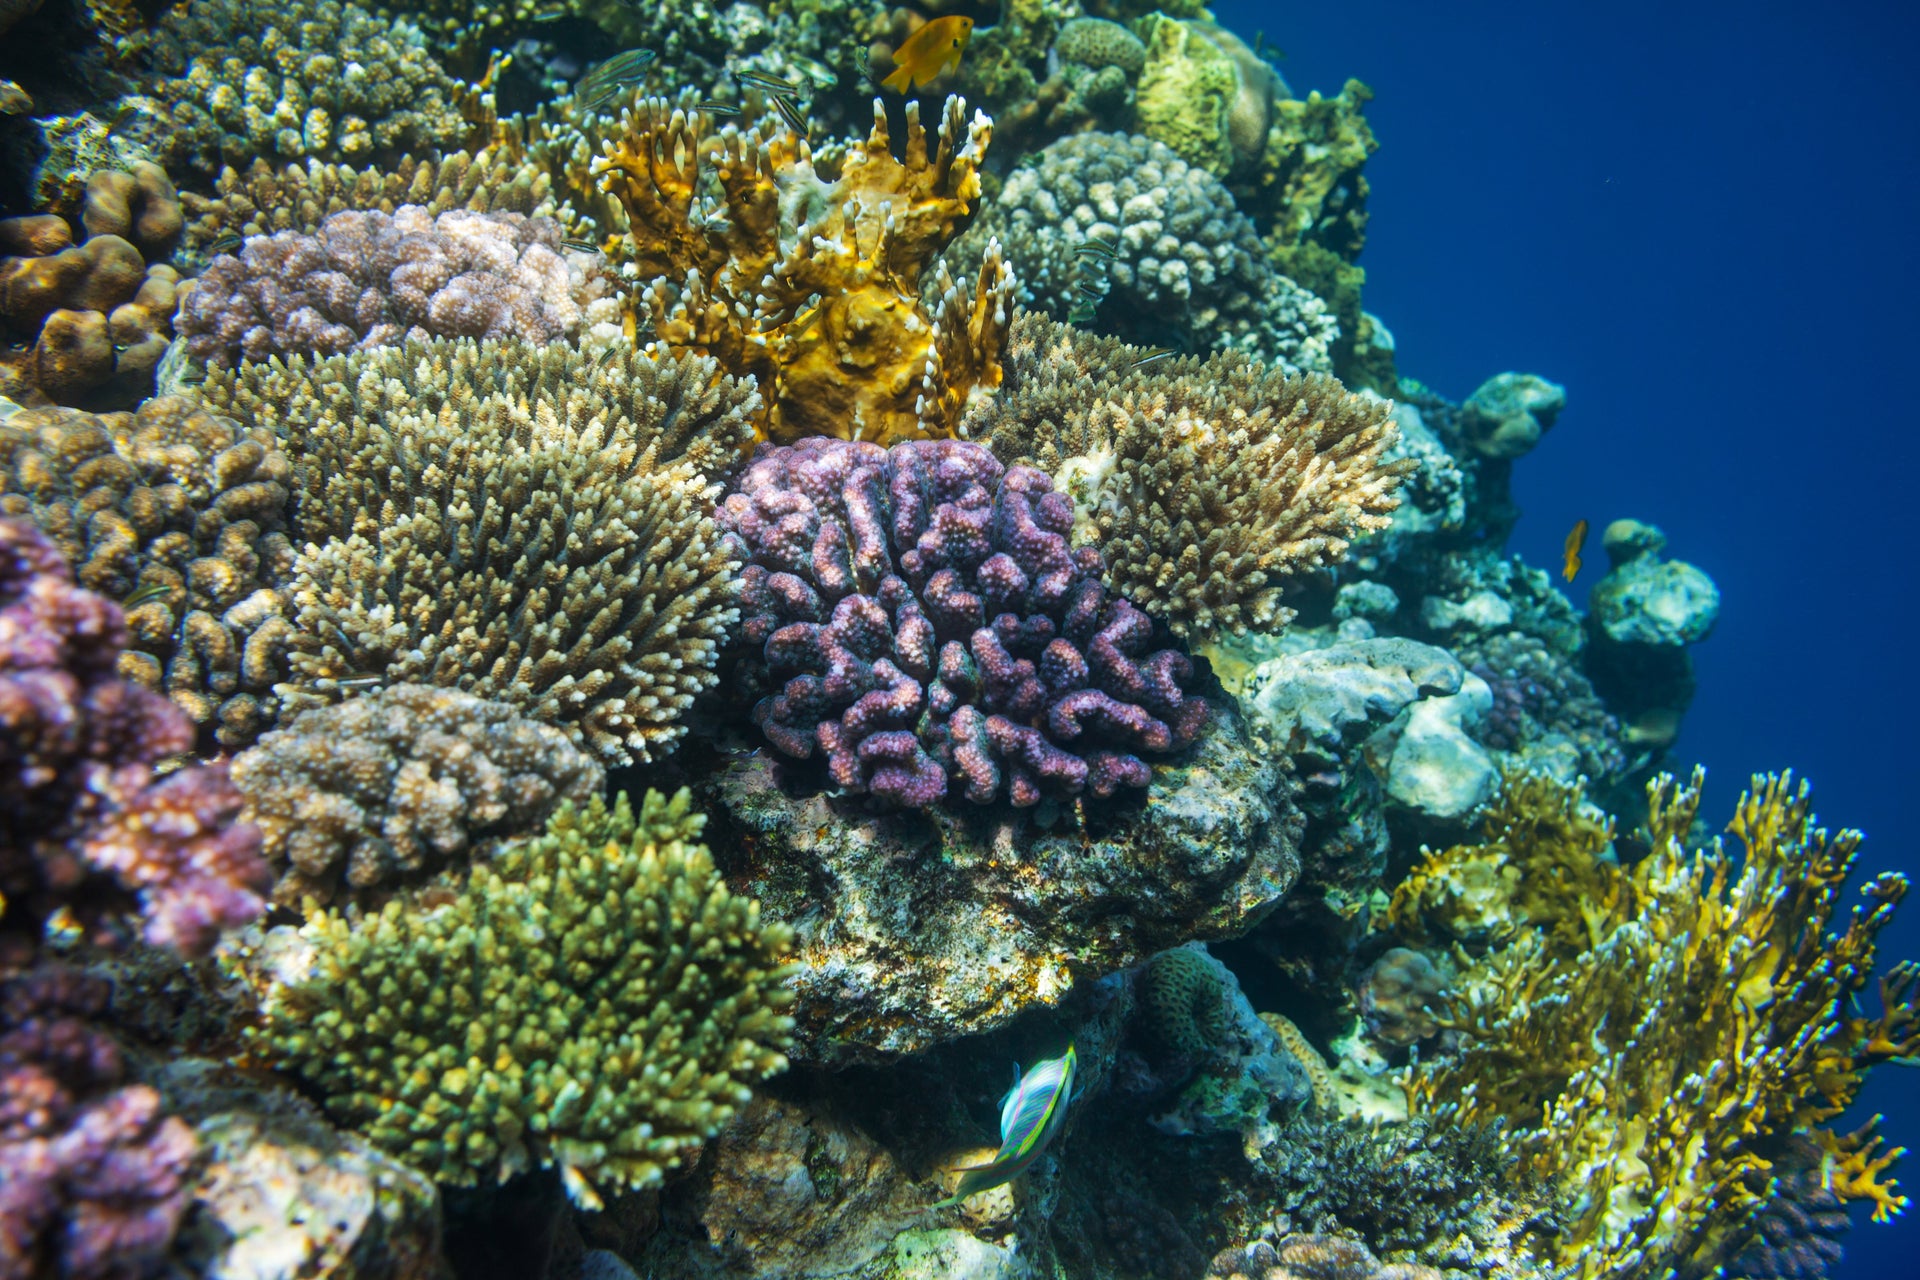 The Coral Reef TN – www.coralreeftn.com